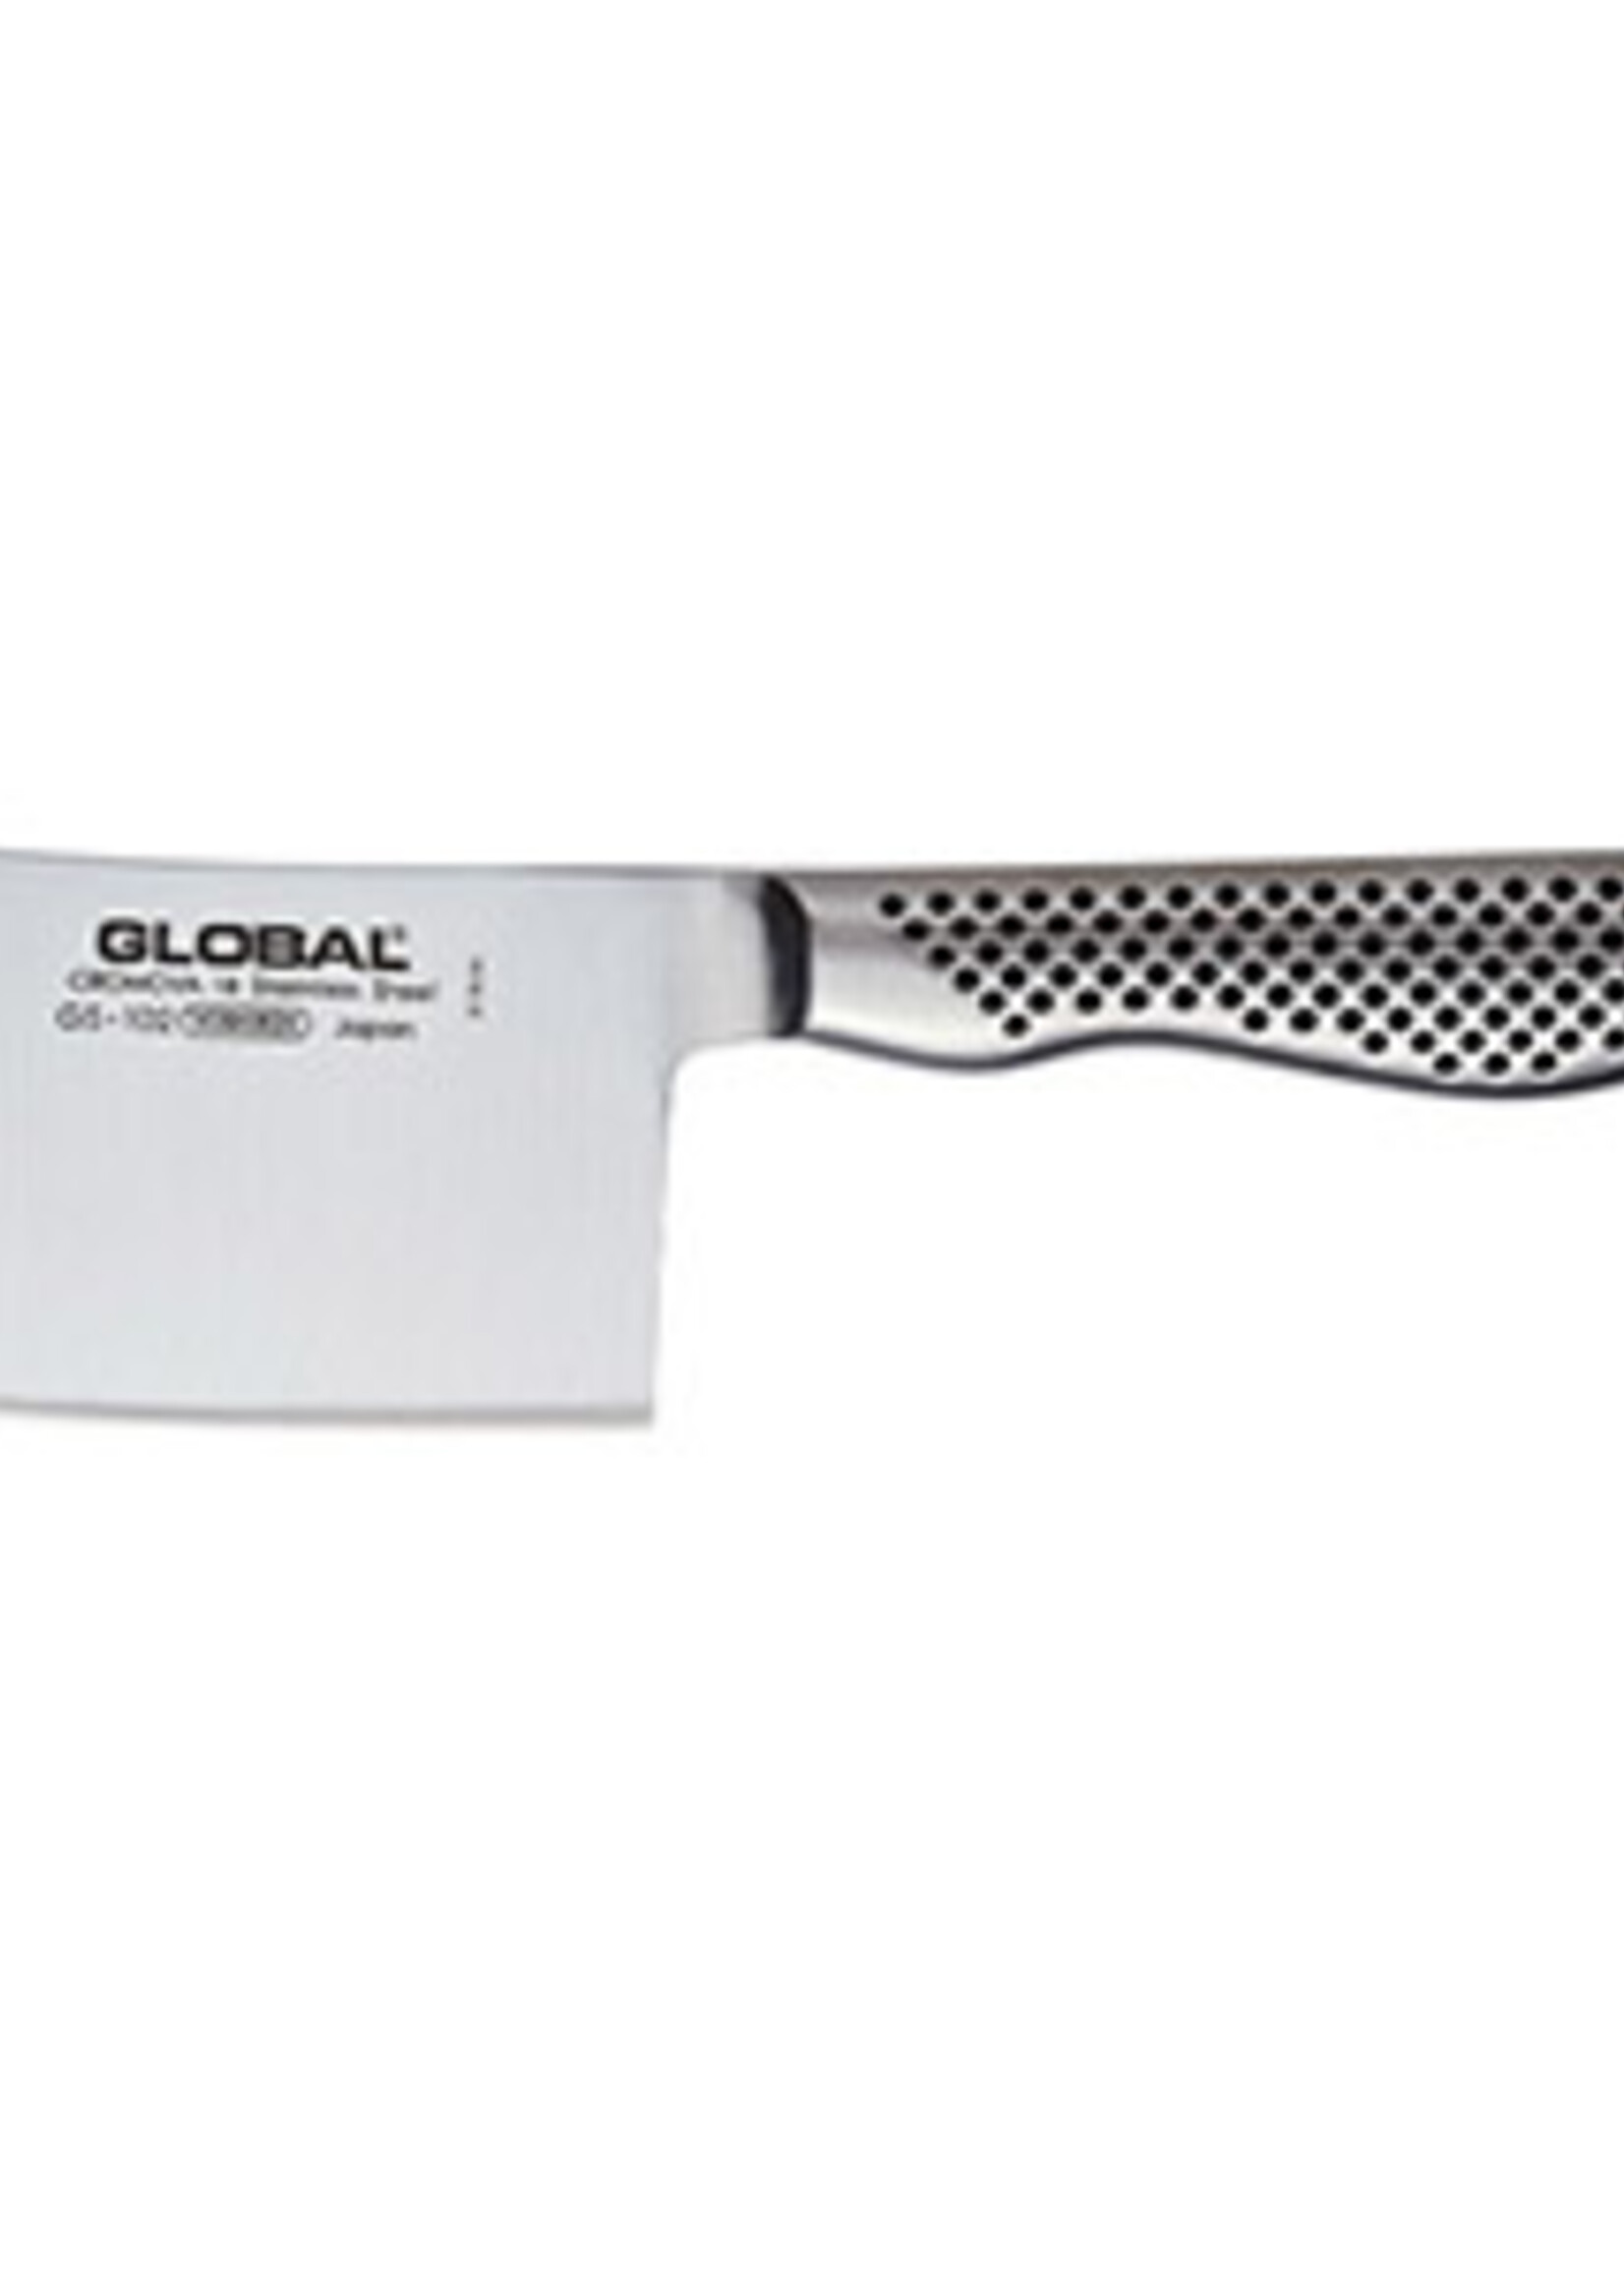 GLOBAL Machette globale GS-102 8cm